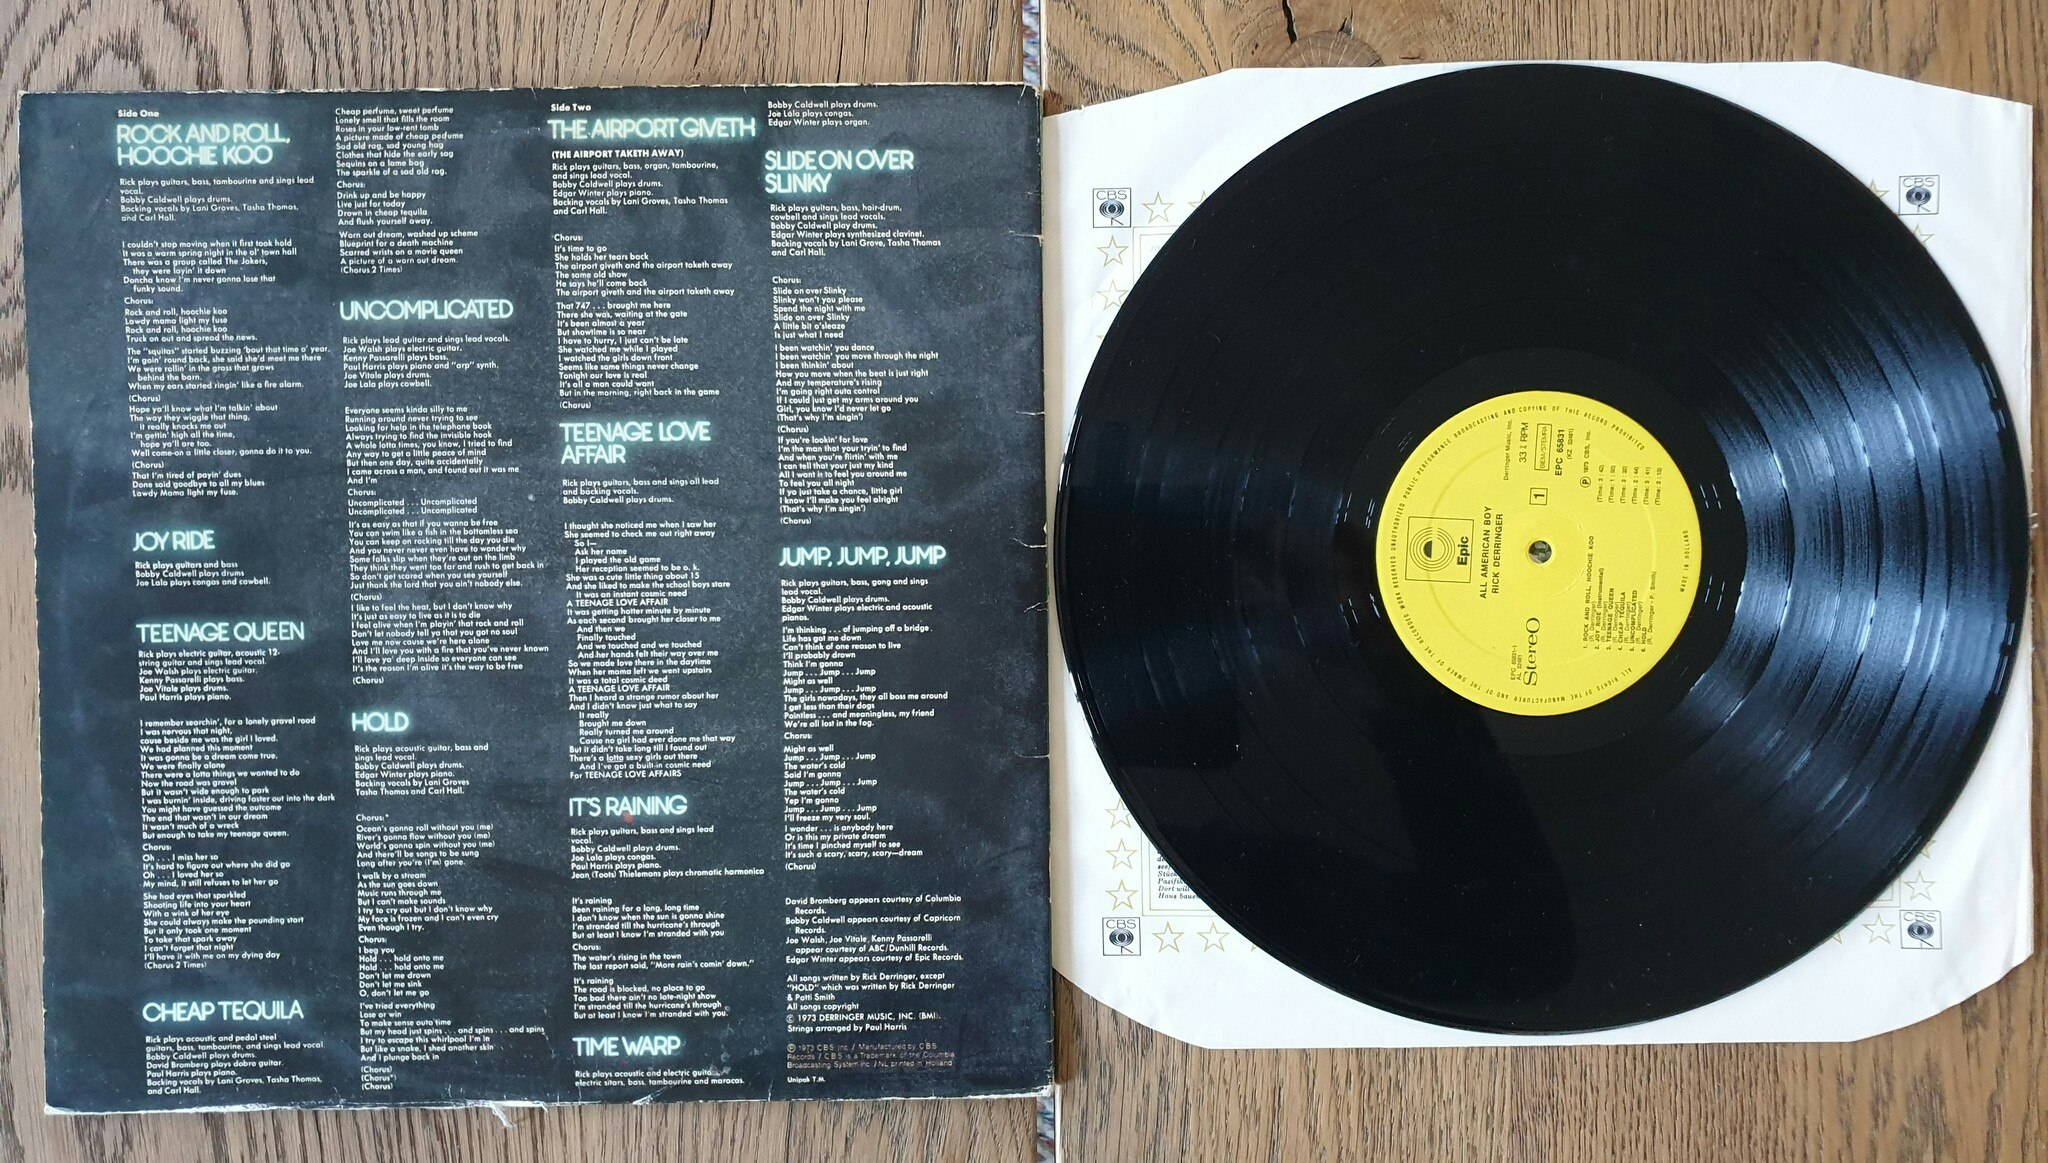 Rick Derringer, All American boy. Vinyl LP